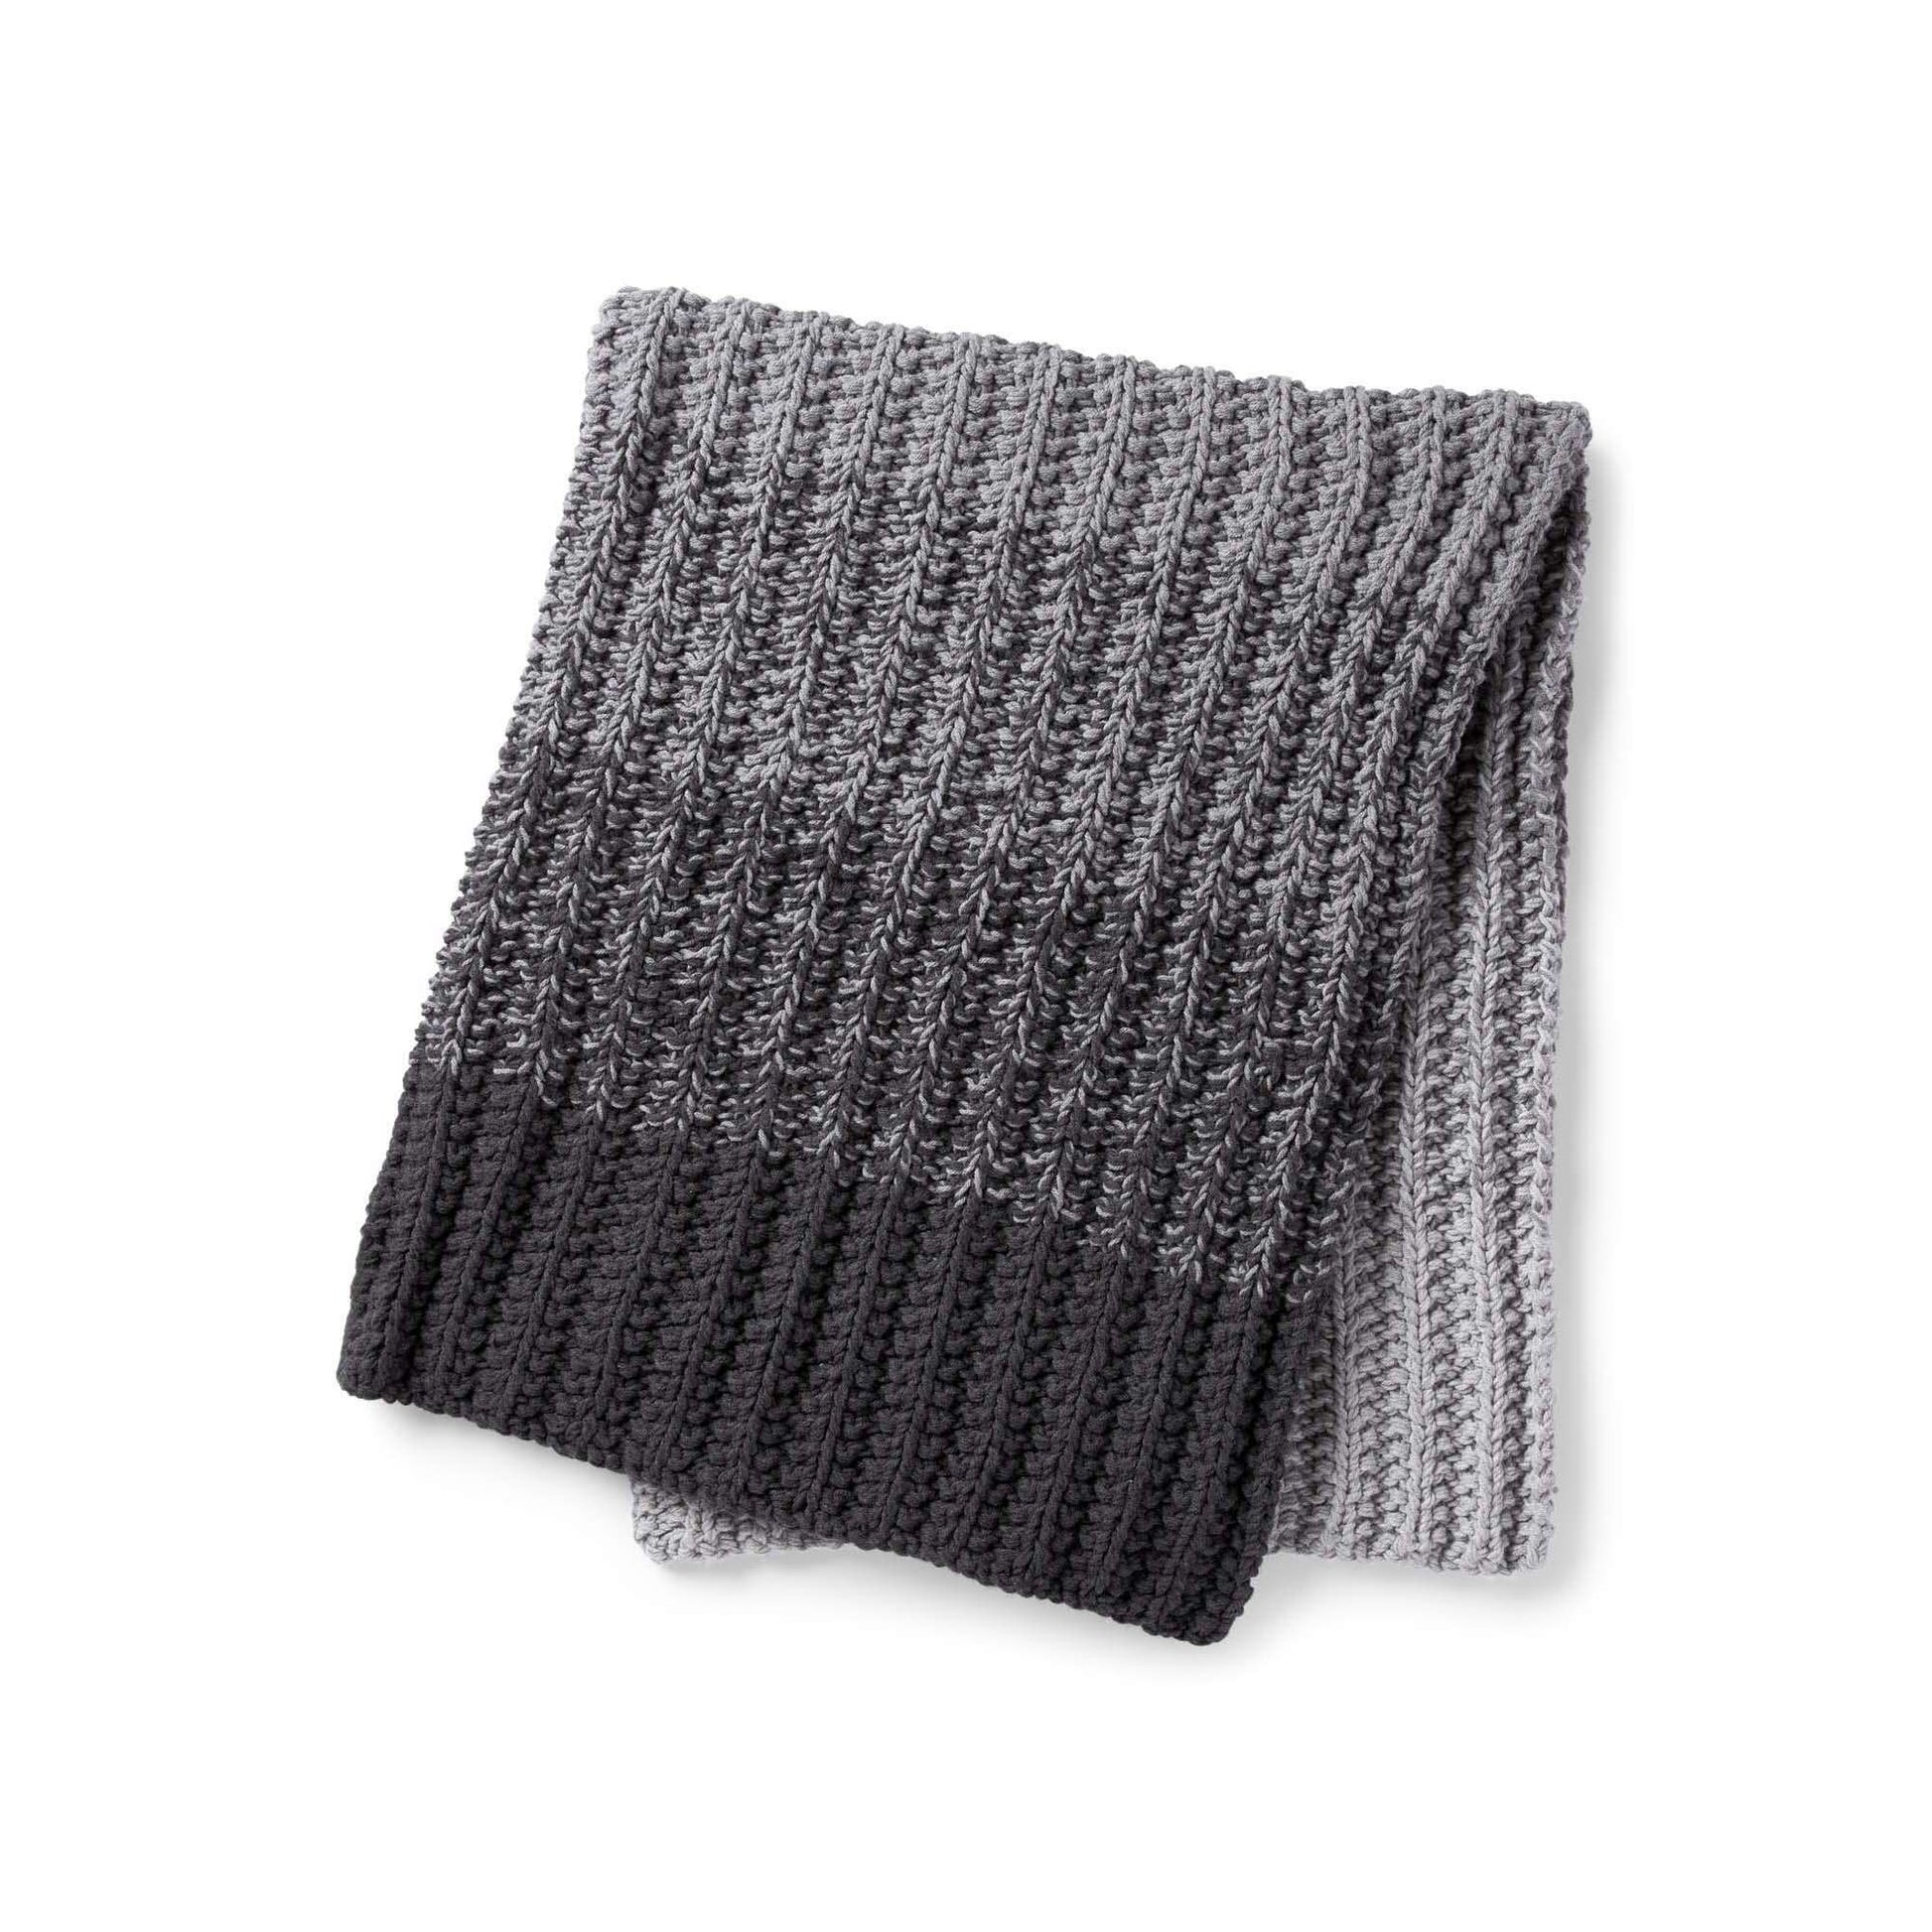 Free Caron Ombre Ridge Knit Blanket Pattern